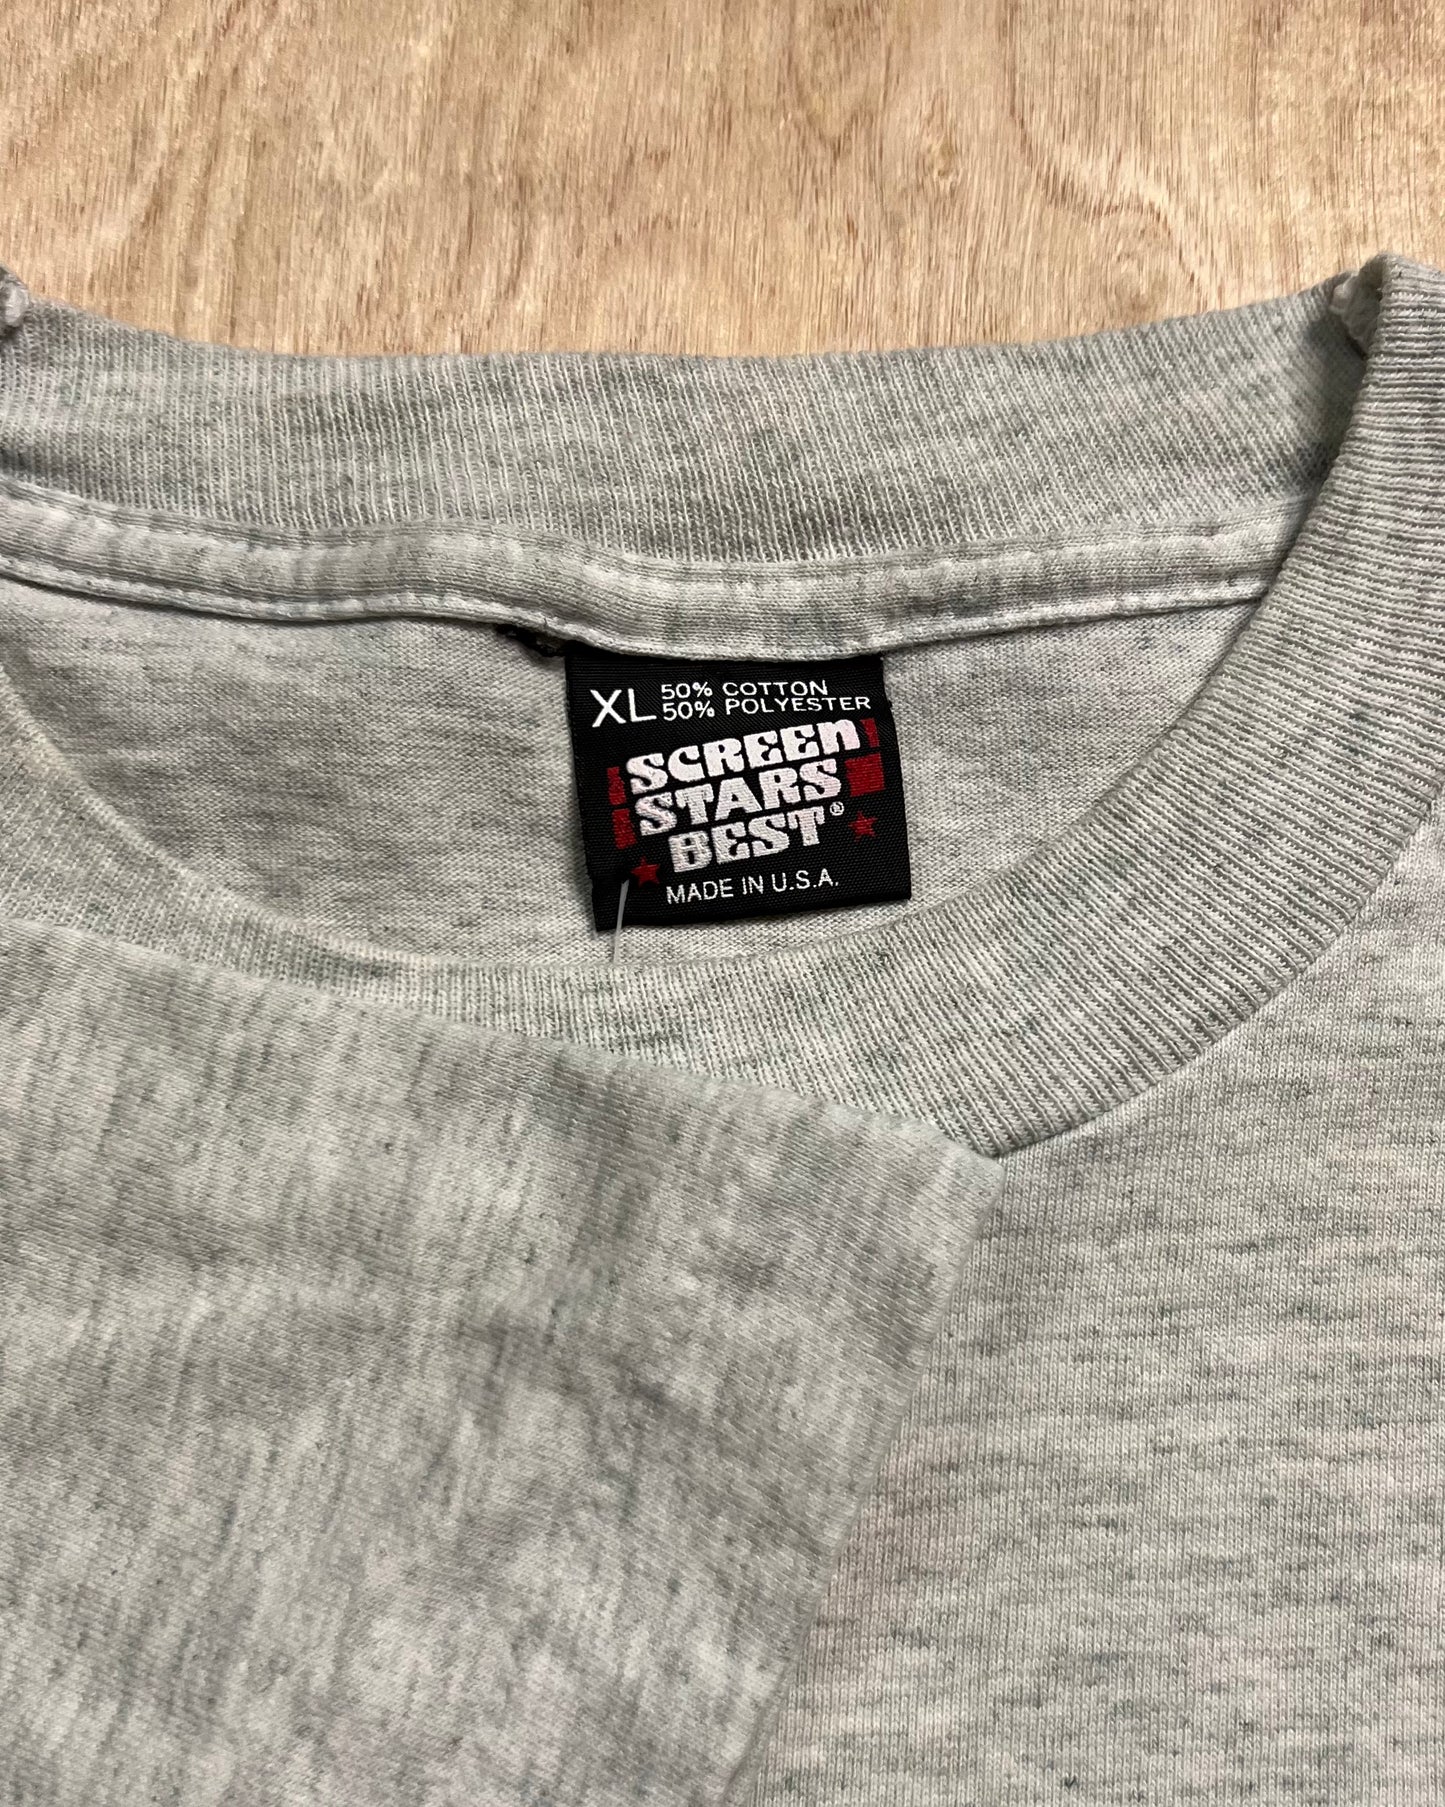 Early 1990's Wisconsin Mondeaux Dam Single Stitch T-Shirt